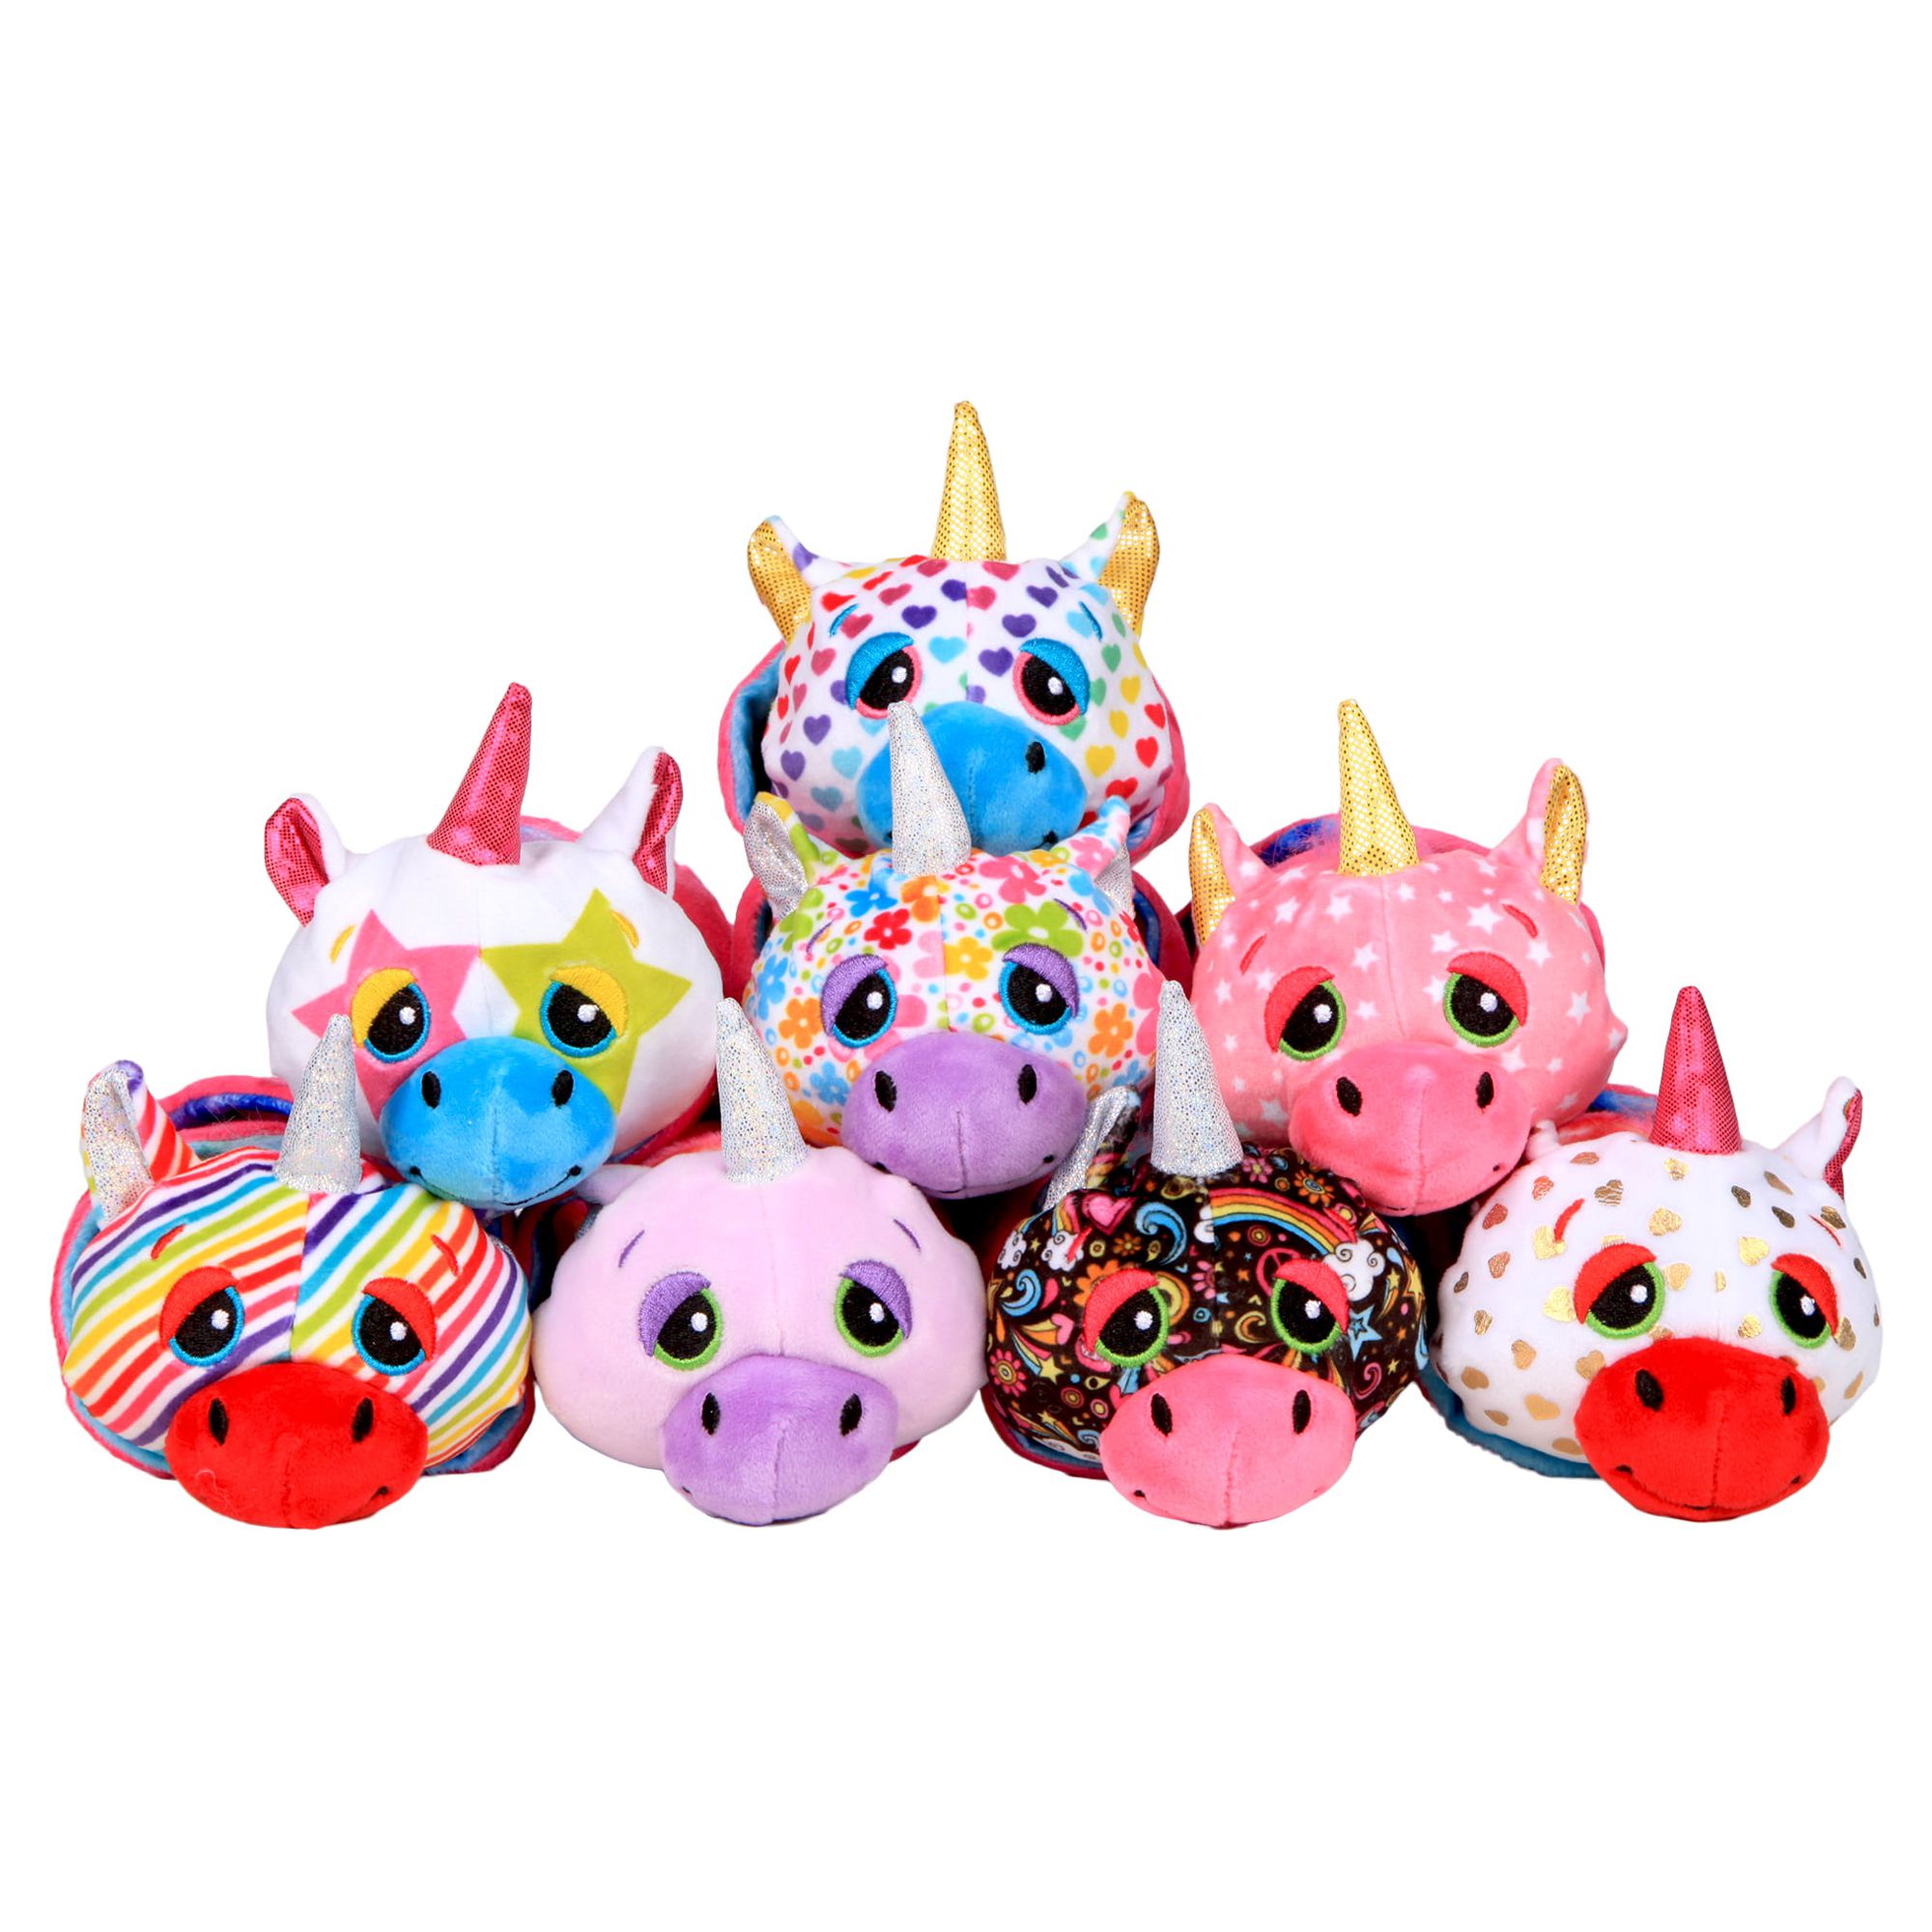 Cutetitos Unicornitos - Surprise Stuffed Animals - Collectible Plush Unicorns (Styles May Vary) - image 2 of 10